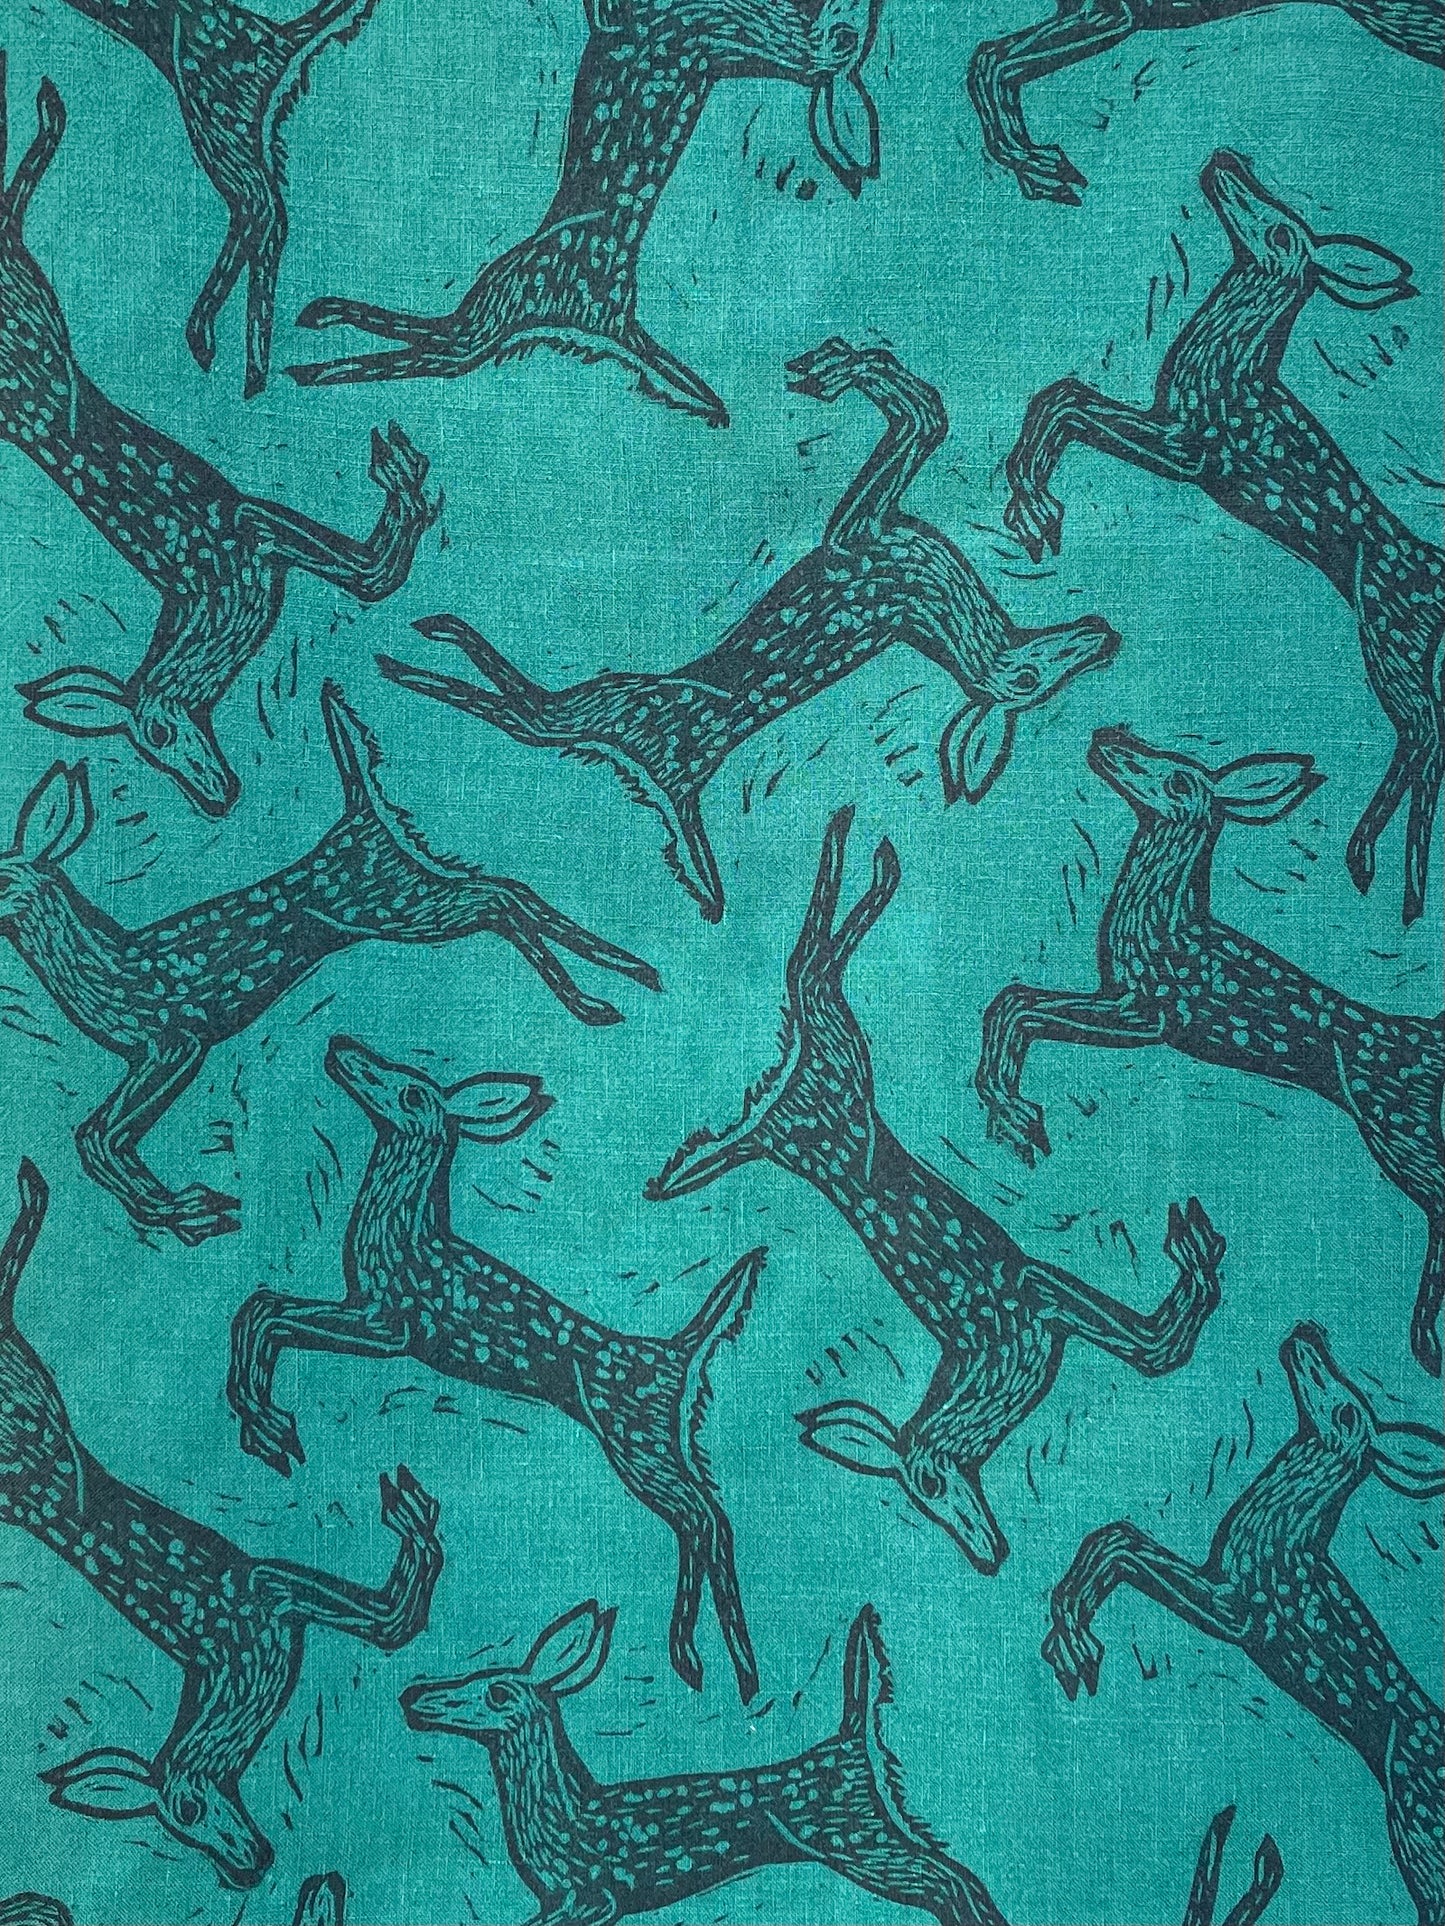 Linen Tea Towel: White Tail Deer on Emerald